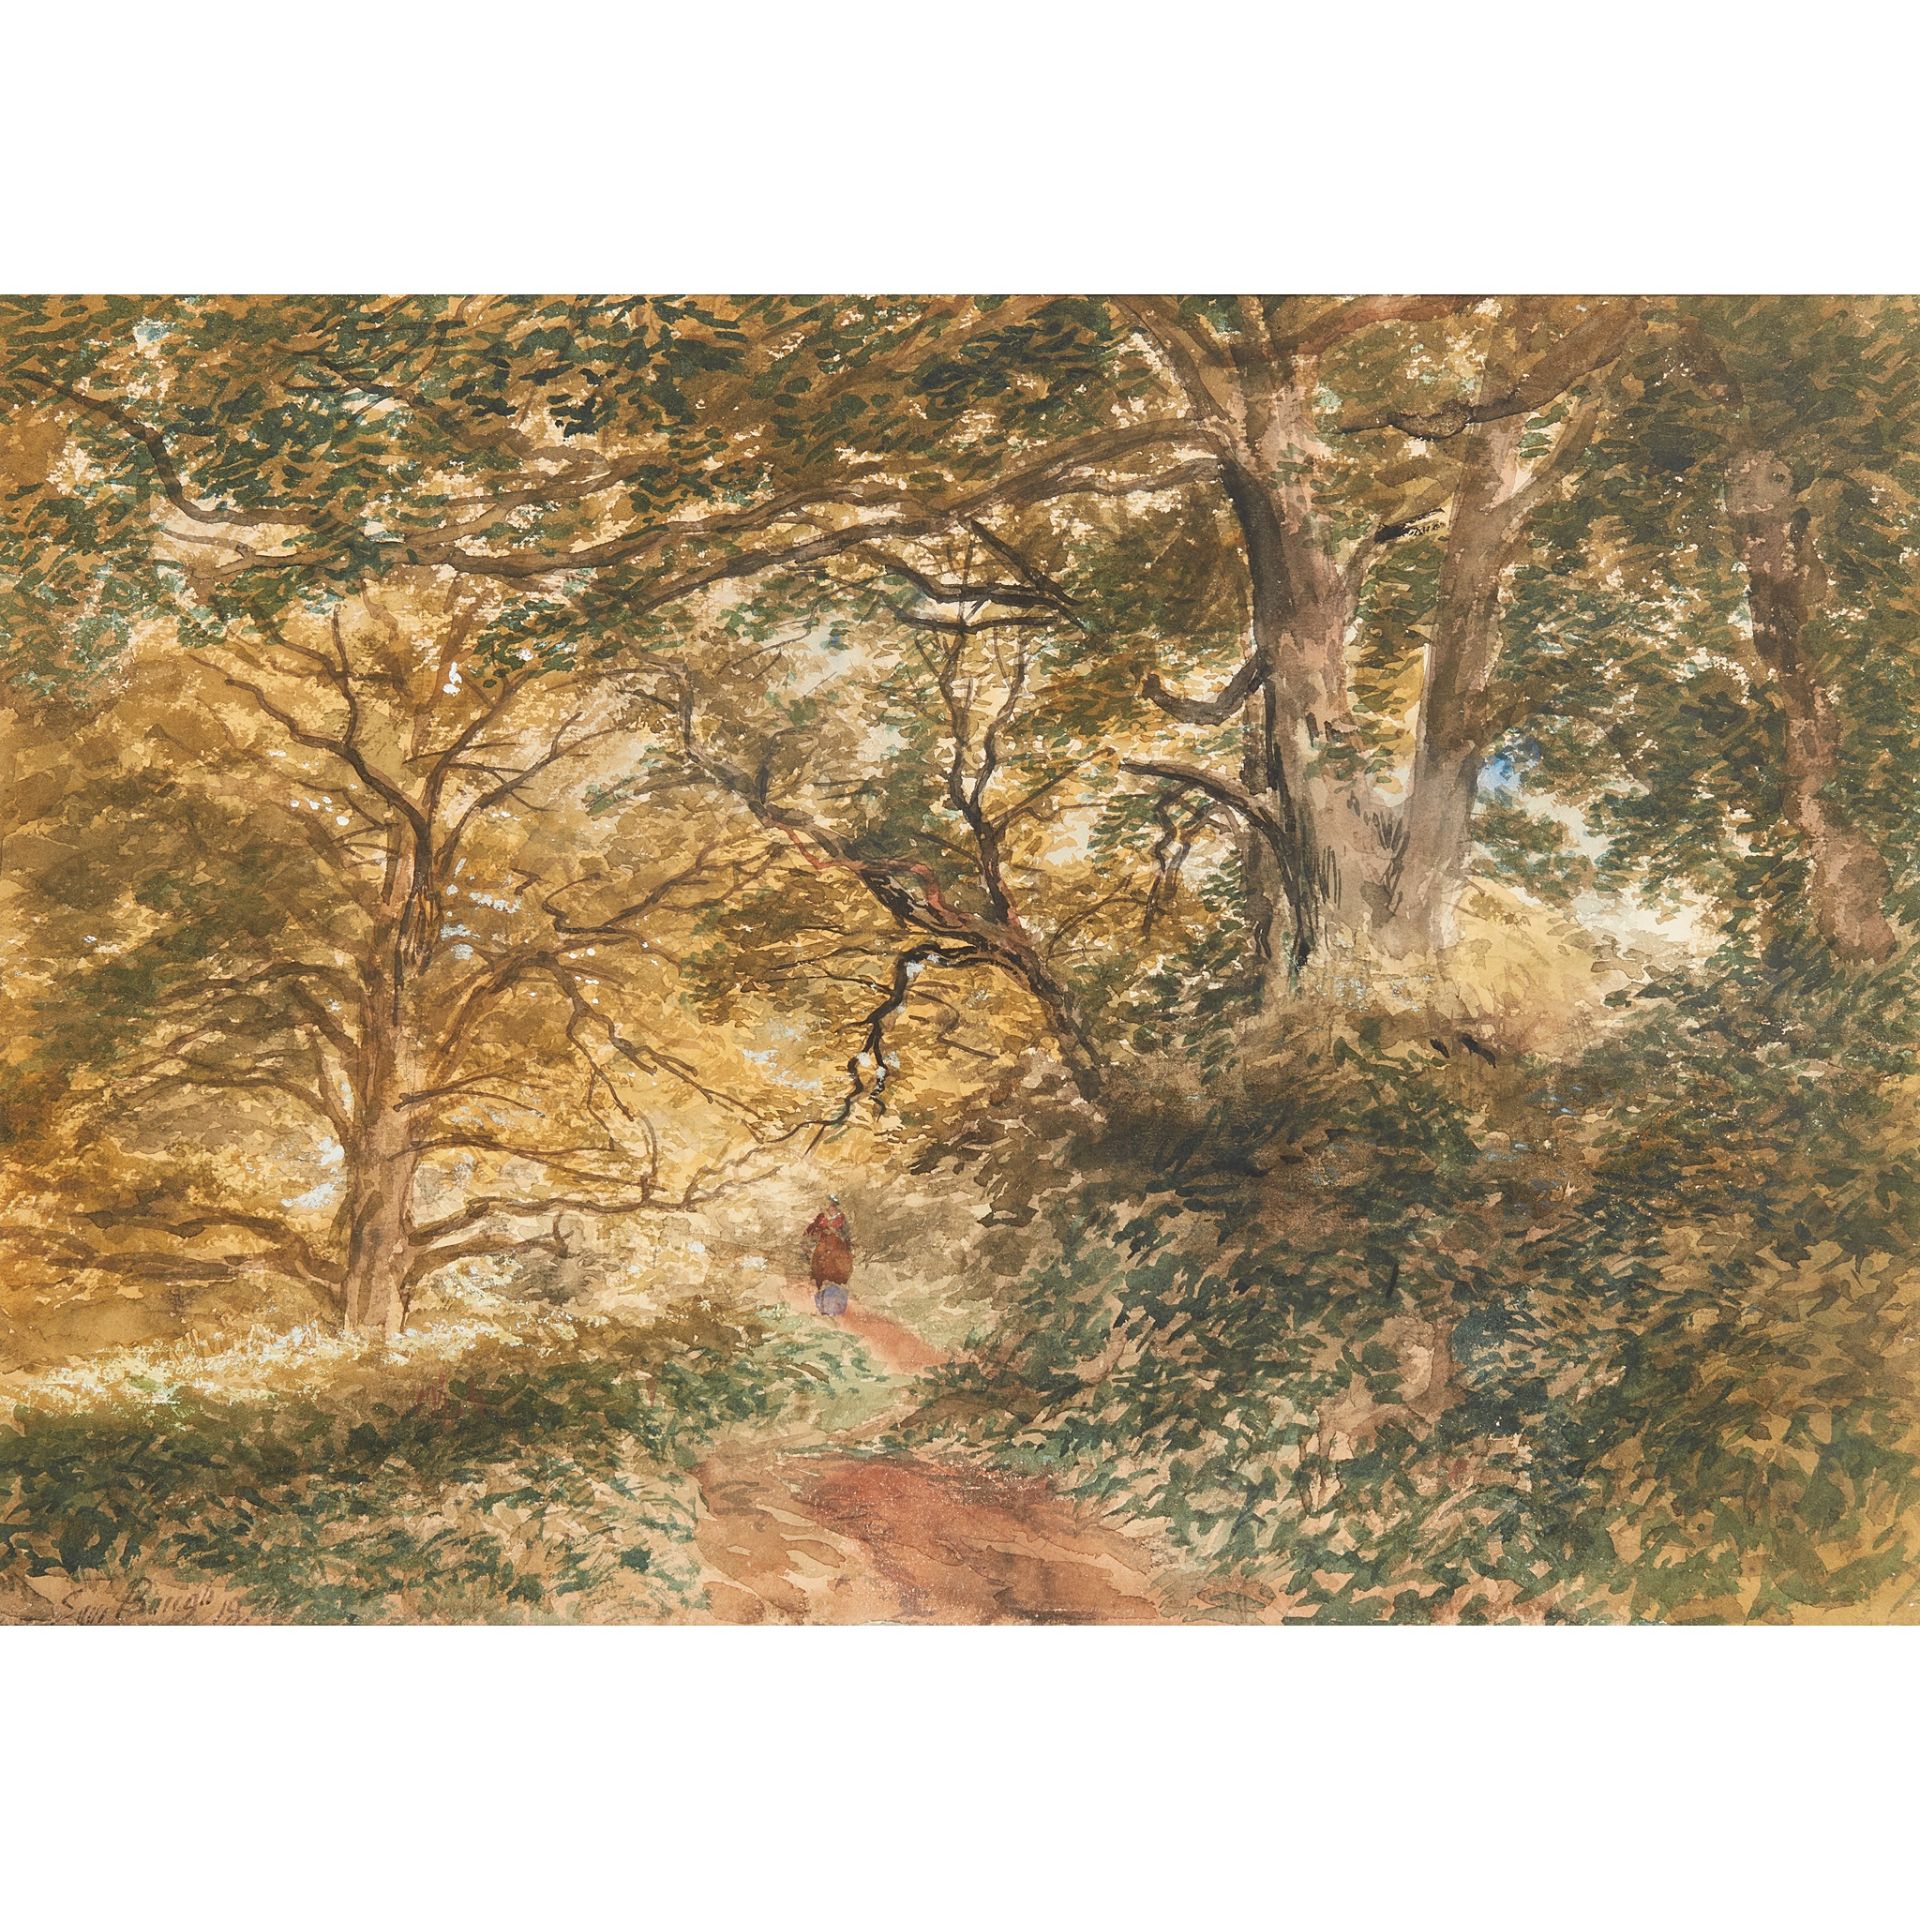 SAM BOUGH R.S.A, R.S.W. (SCOTTISH 1822-1878) CADZOW FOREST